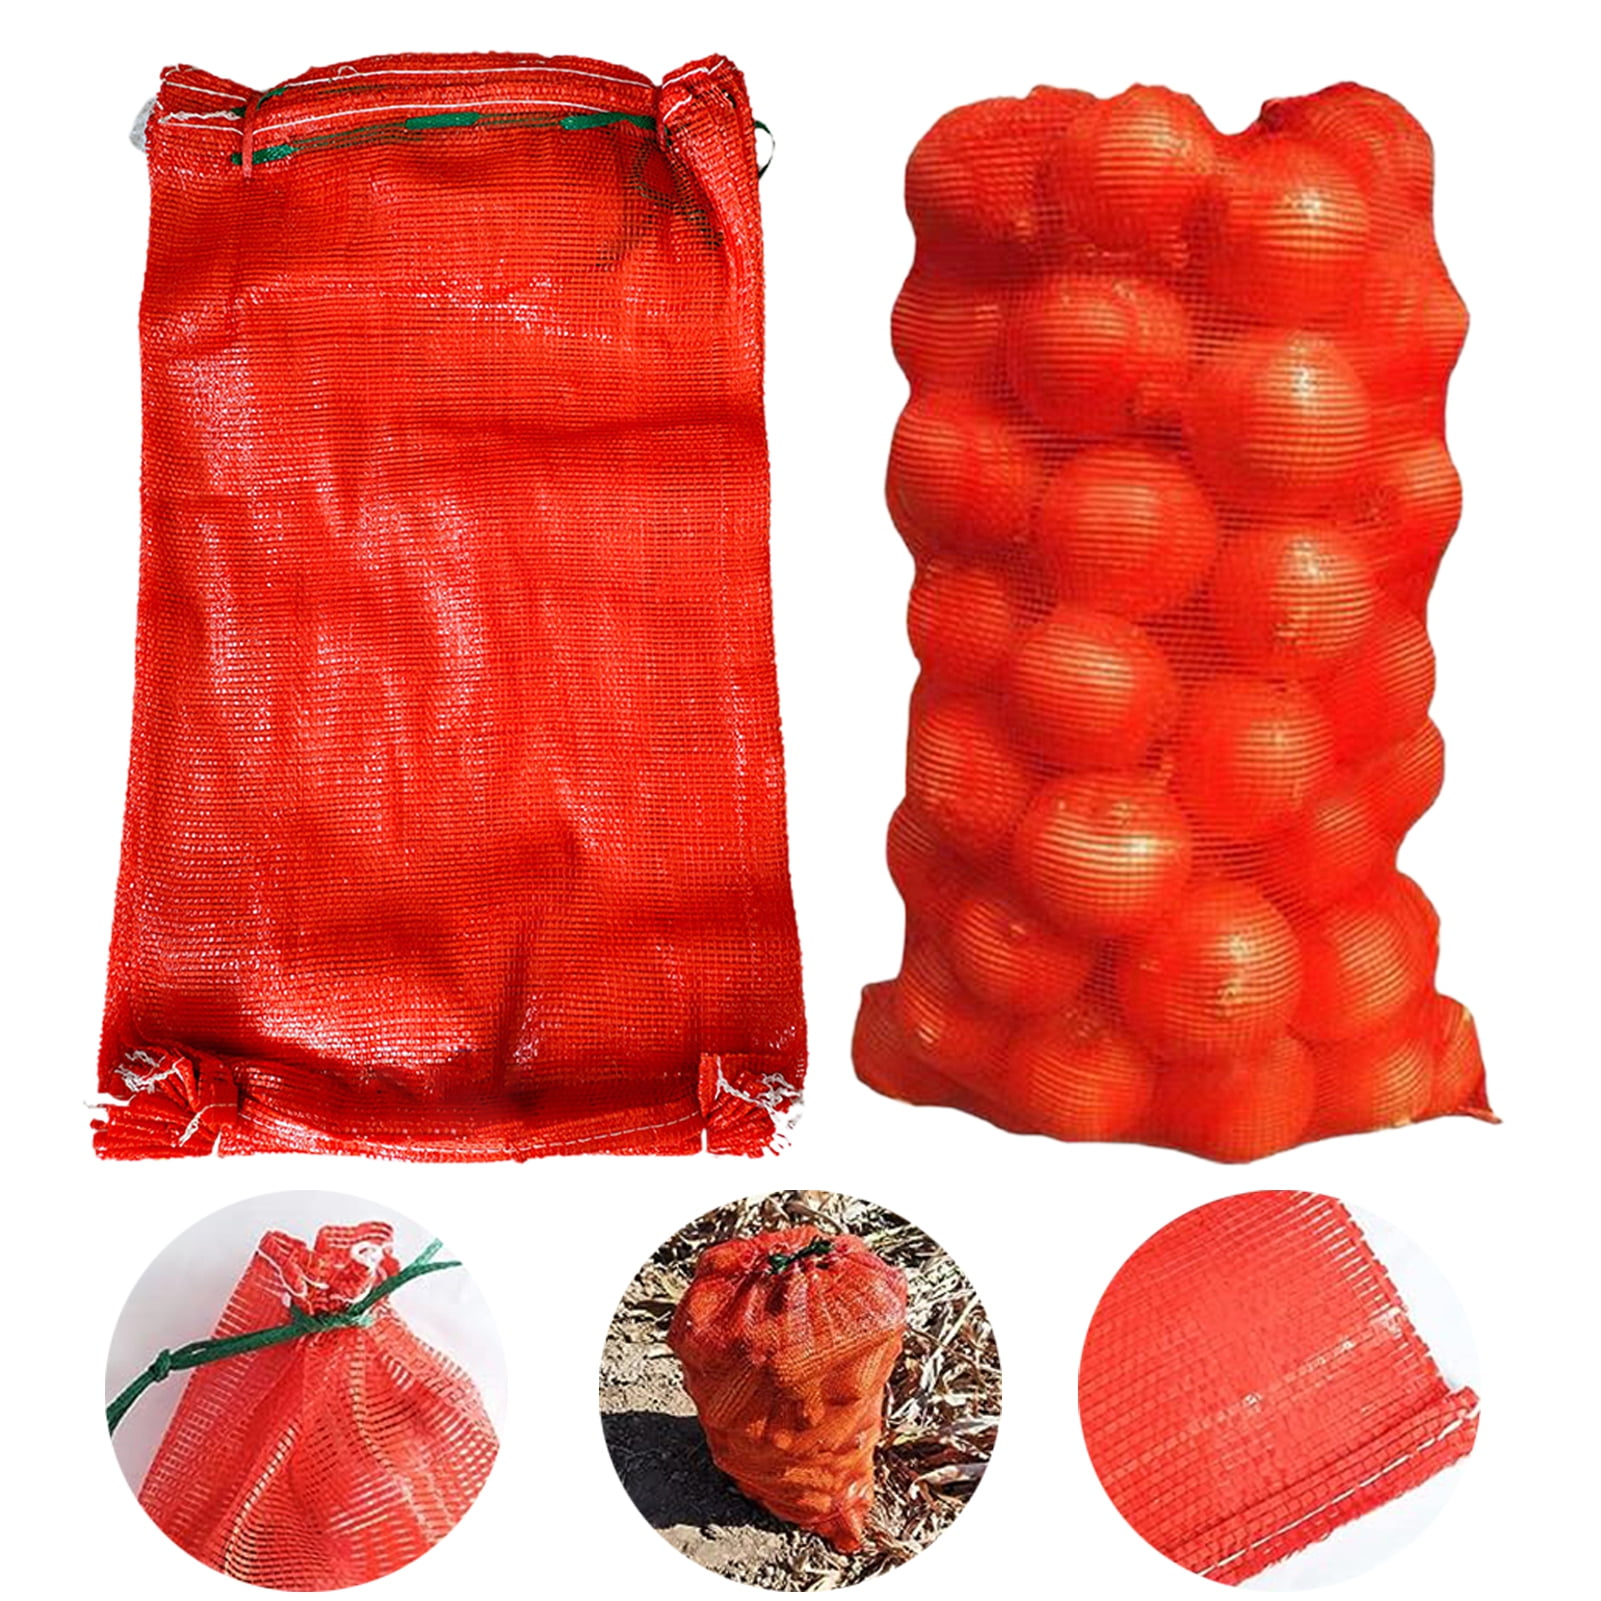 Washranp 10Pcs Mesh Onion Bags,Reusable Mesh Produce Bags Hanging ...